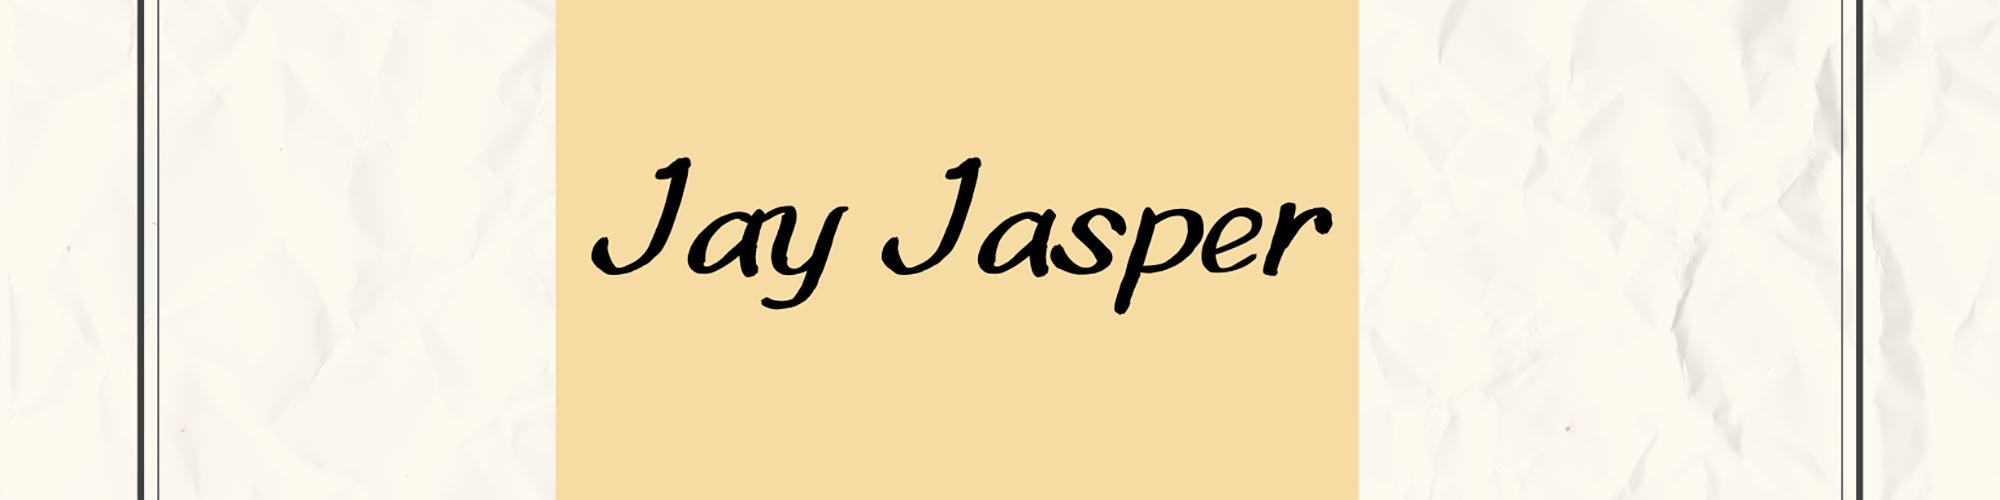 Jay Jasper